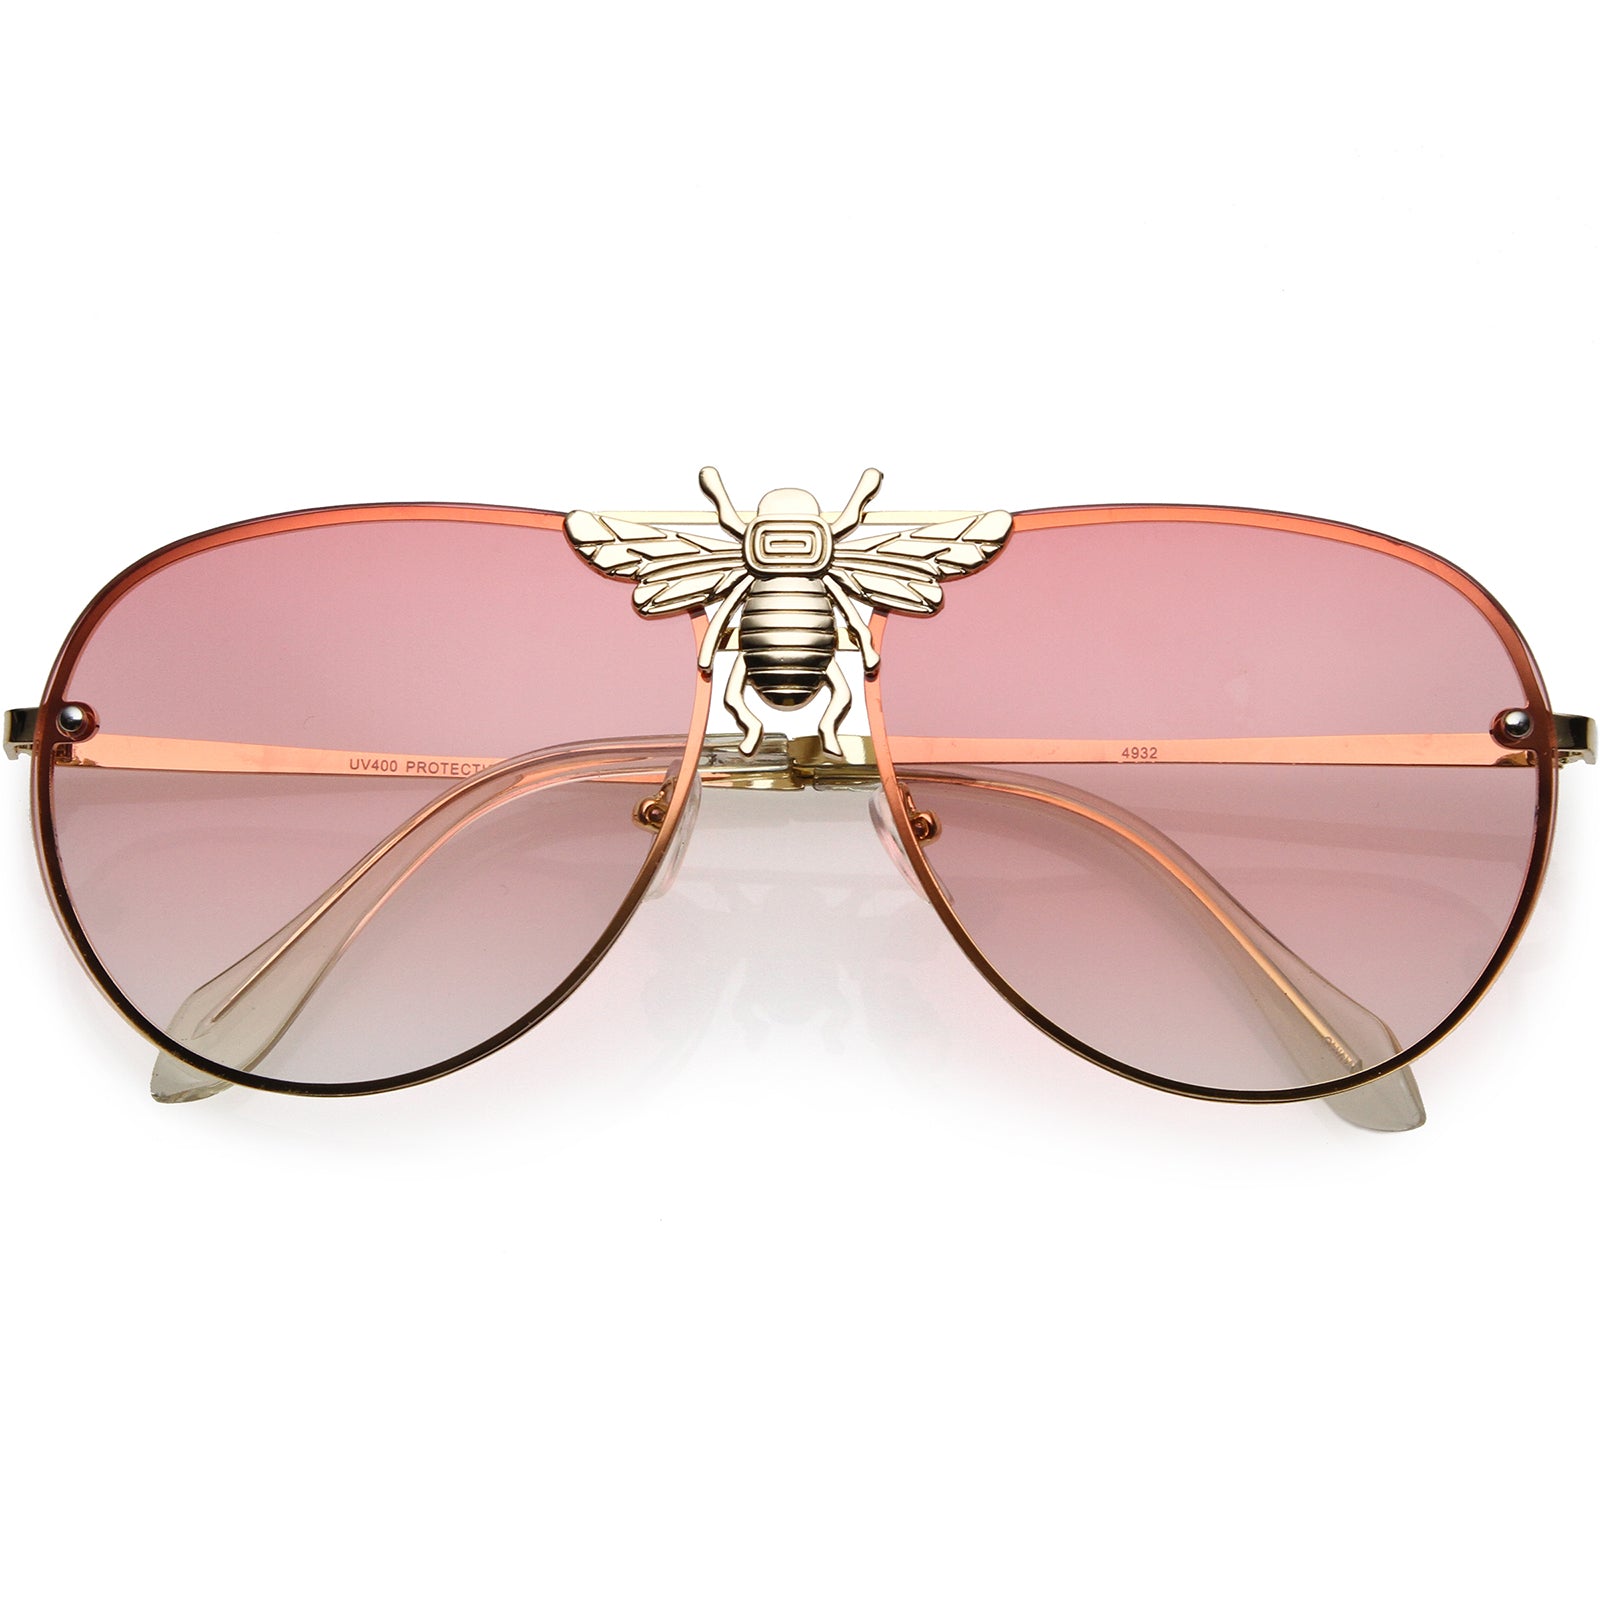 Gucci Sunglasses 2017 Spring / Summer Shop | Sunglasses women aviators,  Sunglasses, Gucci sunglasses